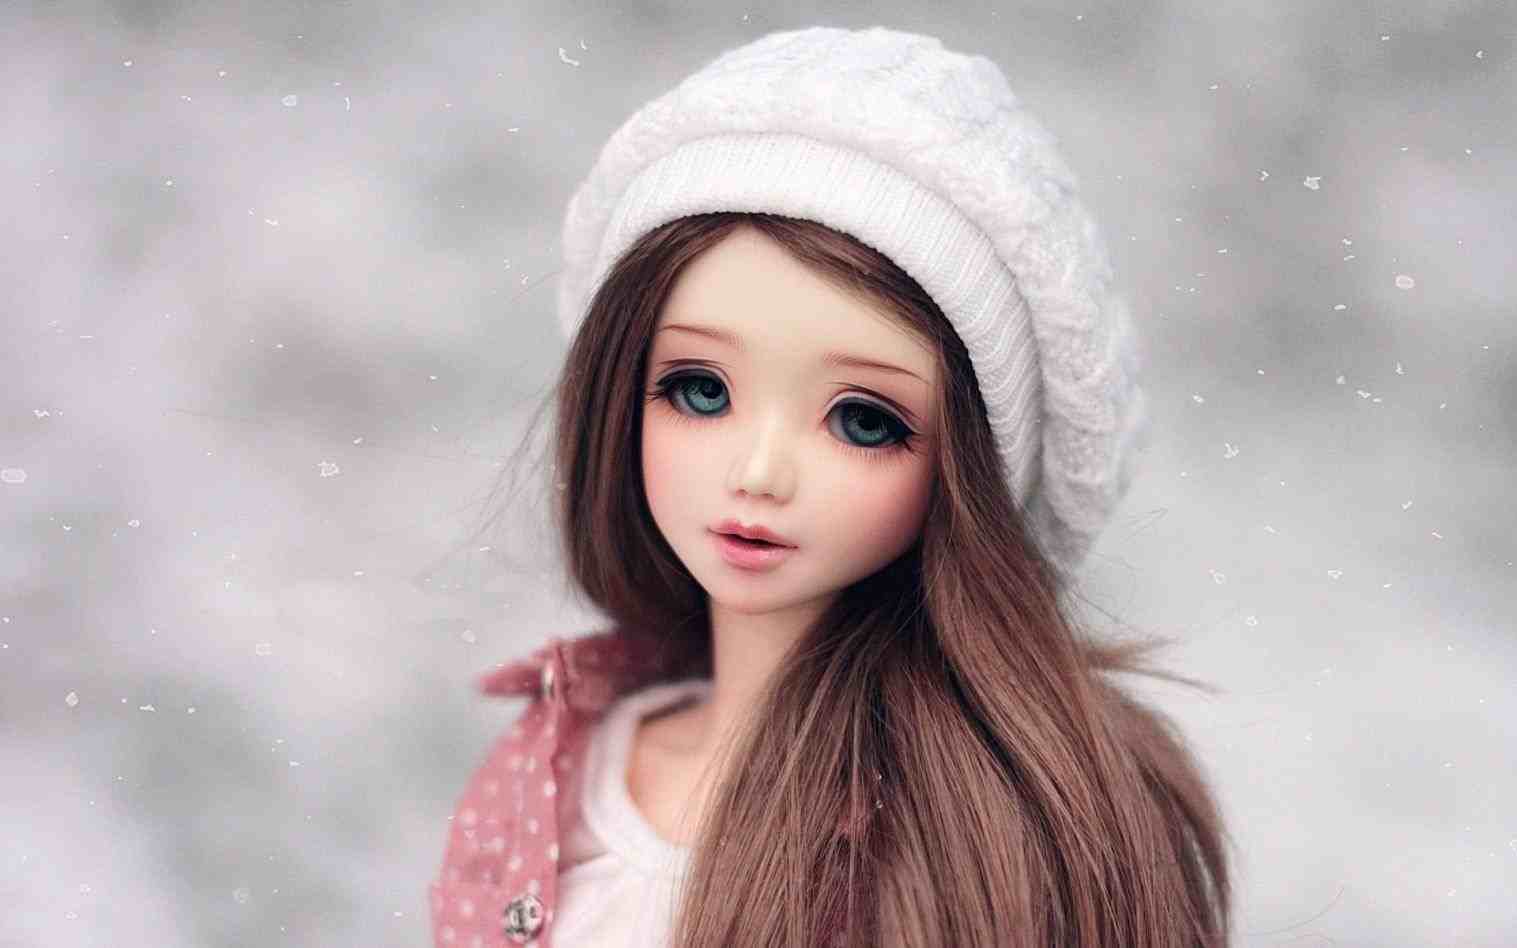 Cute barbie doll HD wallpaper image rhcom top cool